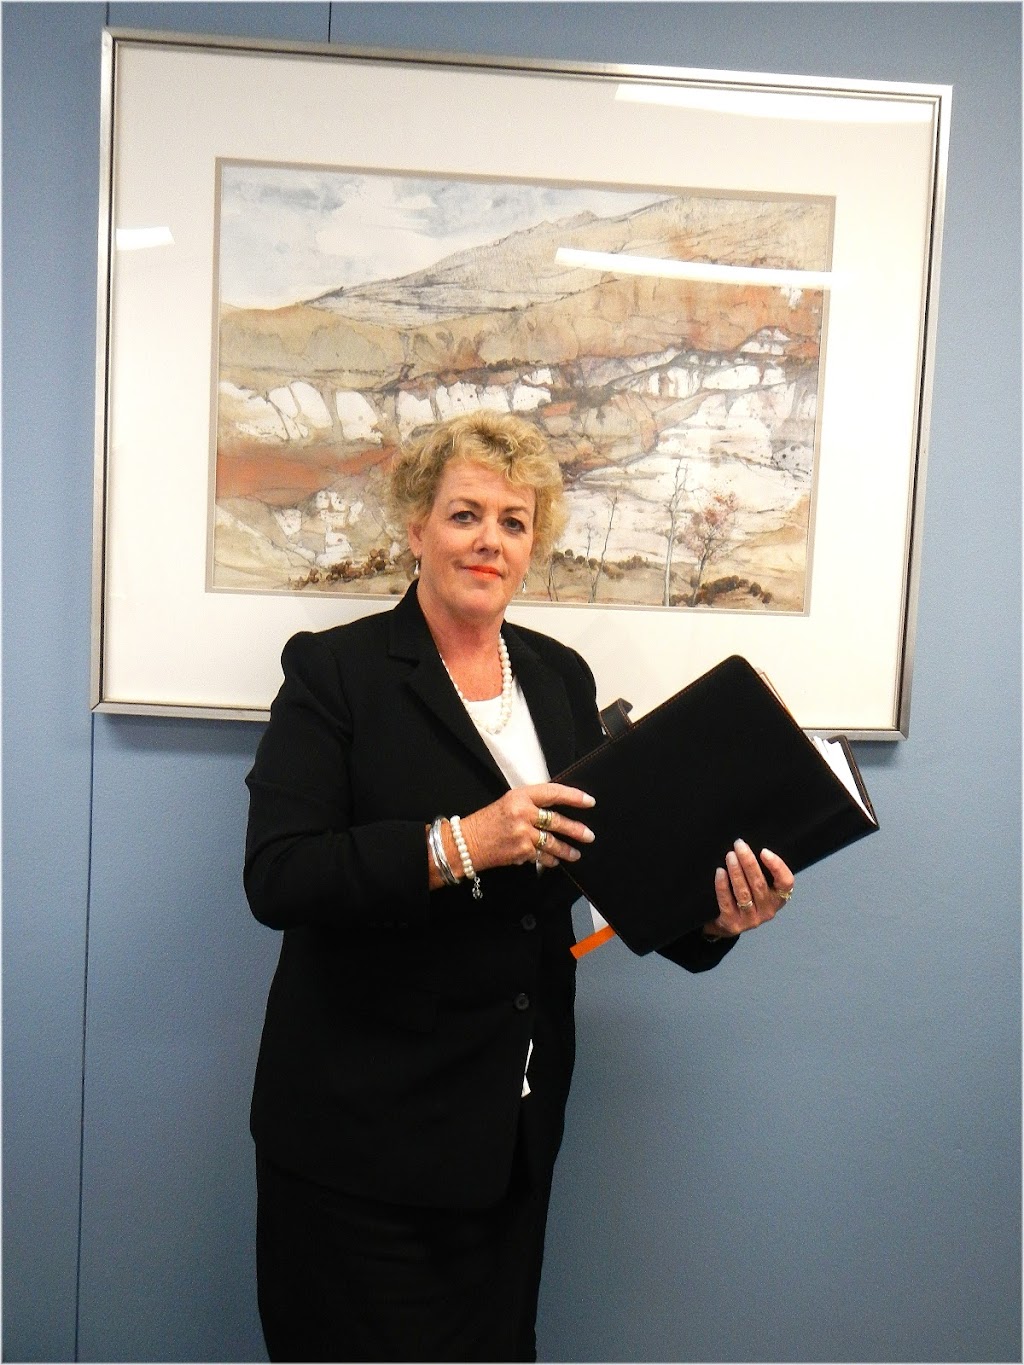 Linda Emery & Associates - Solicitors Central Coast | lawyer | 6/22 Watt St, Gosford NSW 2250, Australia | 0243234766 OR +61 2 4323 4766